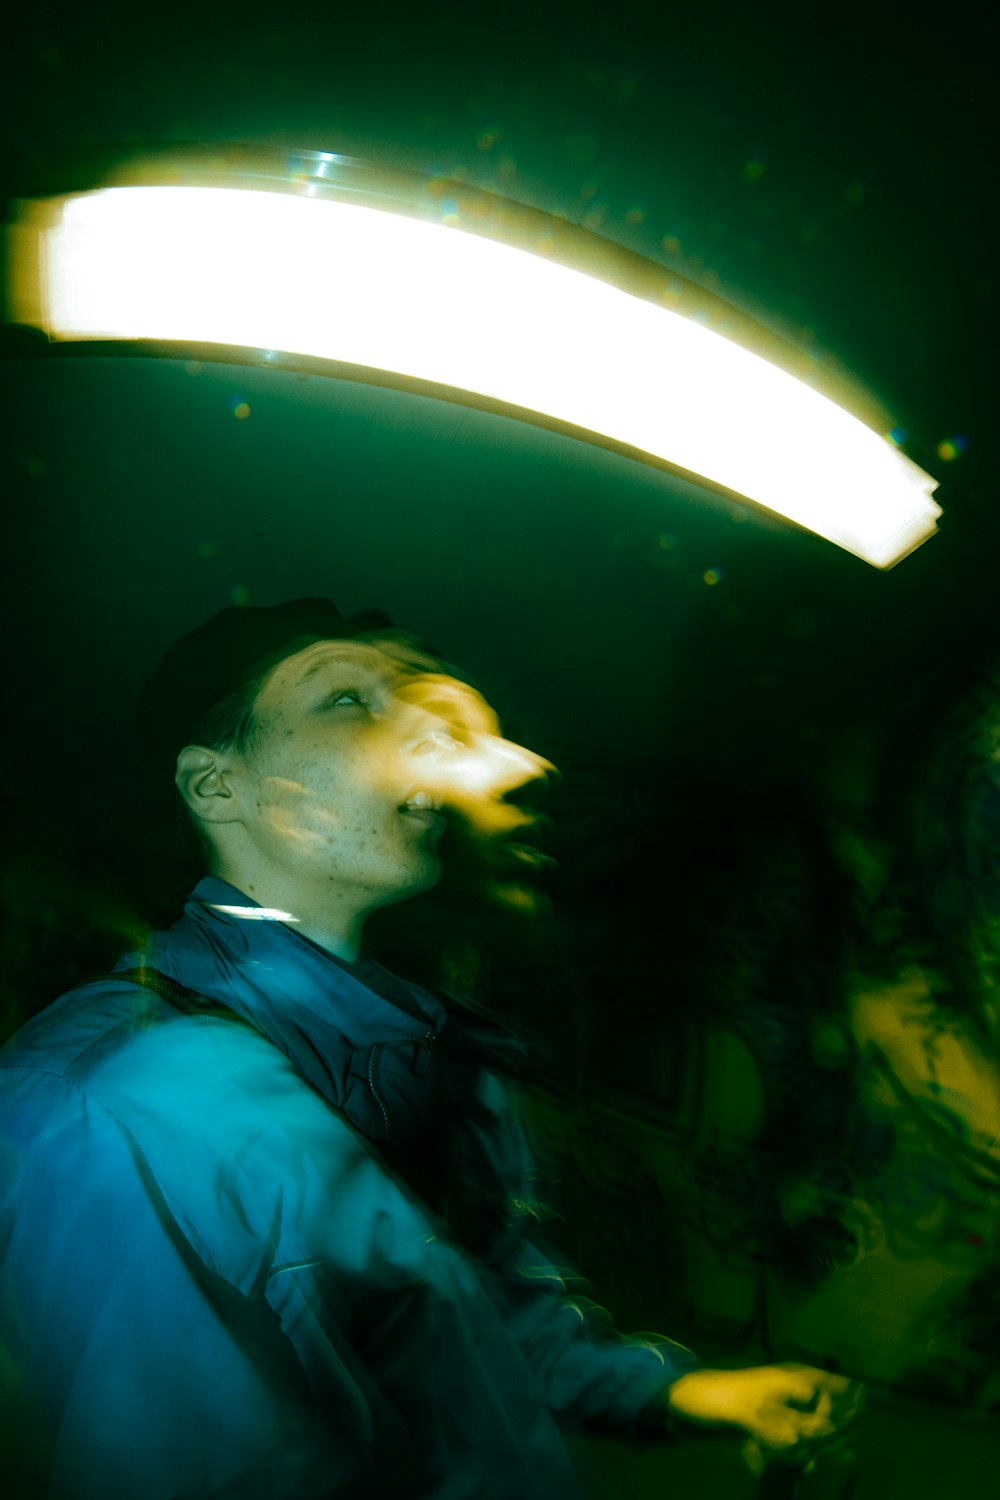 a man standing under a light in a dark room